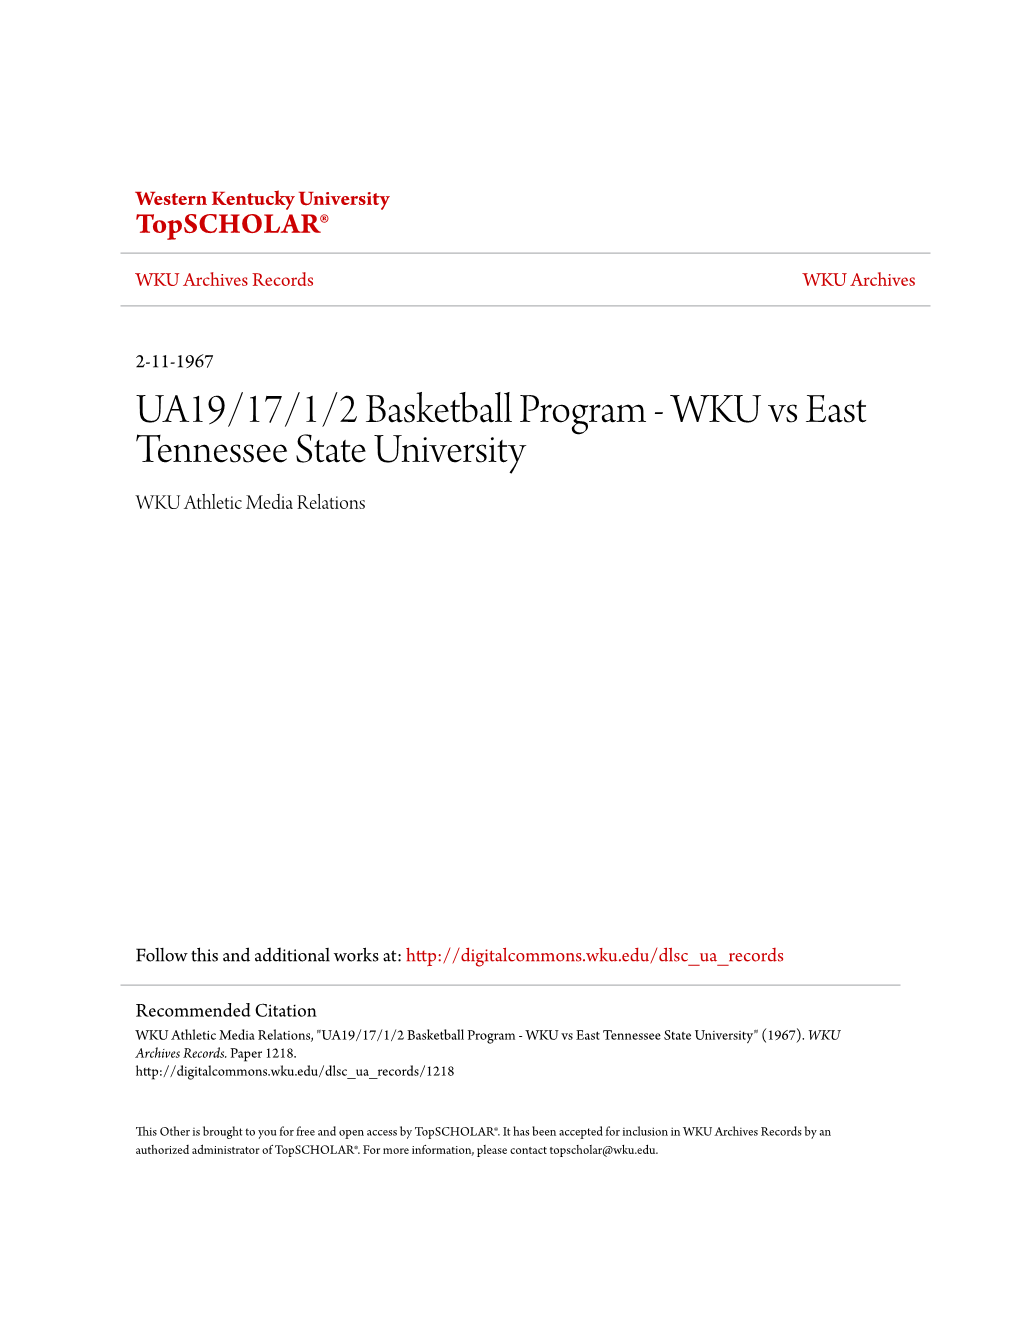 UA19/17/1/2 Basketball Program - WKU Vs East Tennessee State University WKU Athletic Media Relations